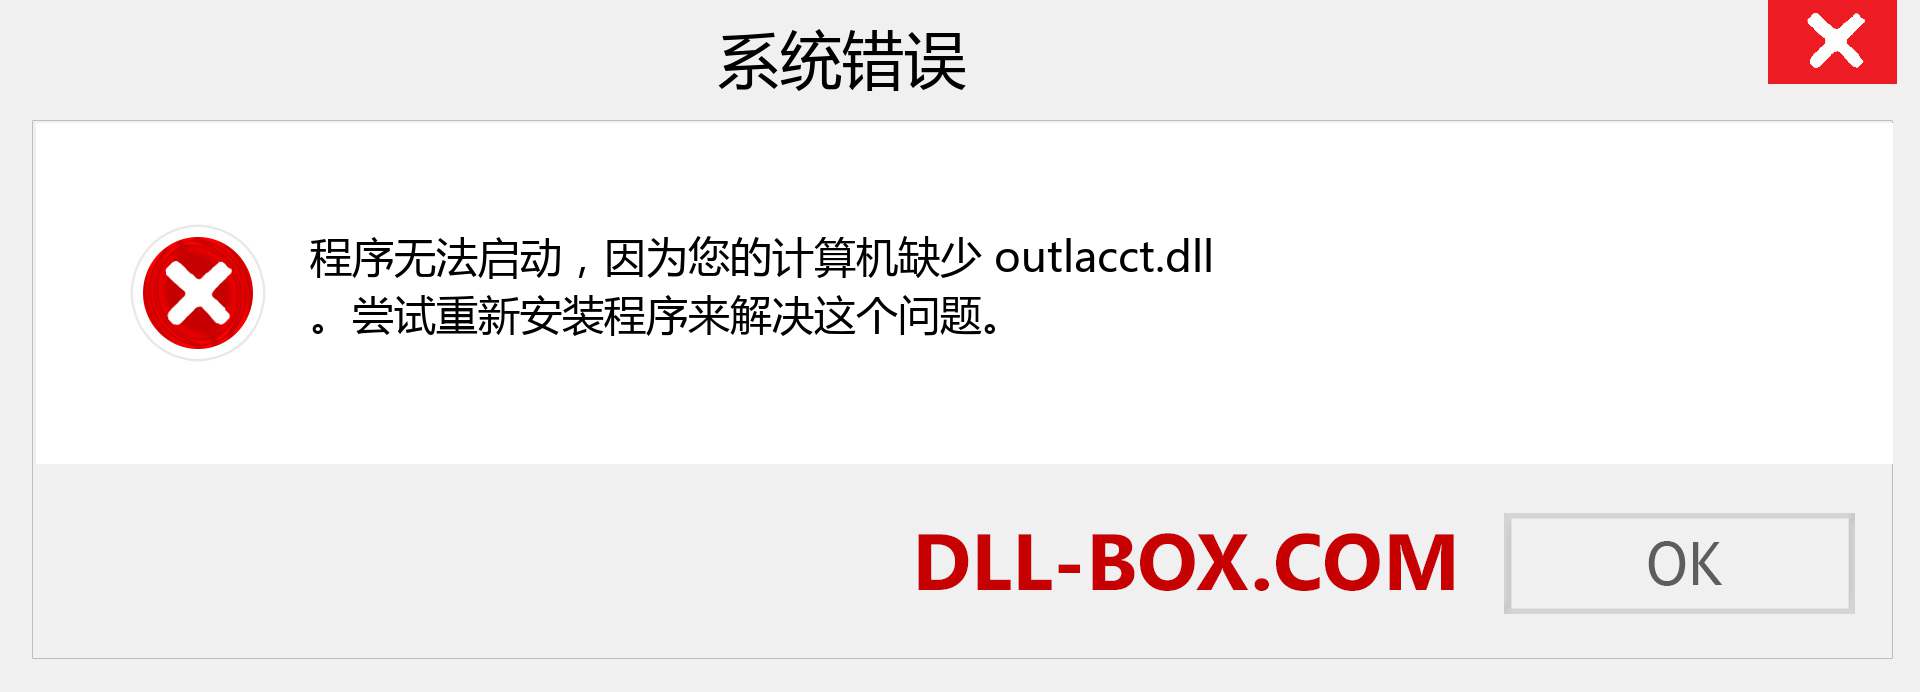 outlacct.dll 文件丢失？。 适用于 Windows 7、8、10 的下载 - 修复 Windows、照片、图像上的 outlacct dll 丢失错误